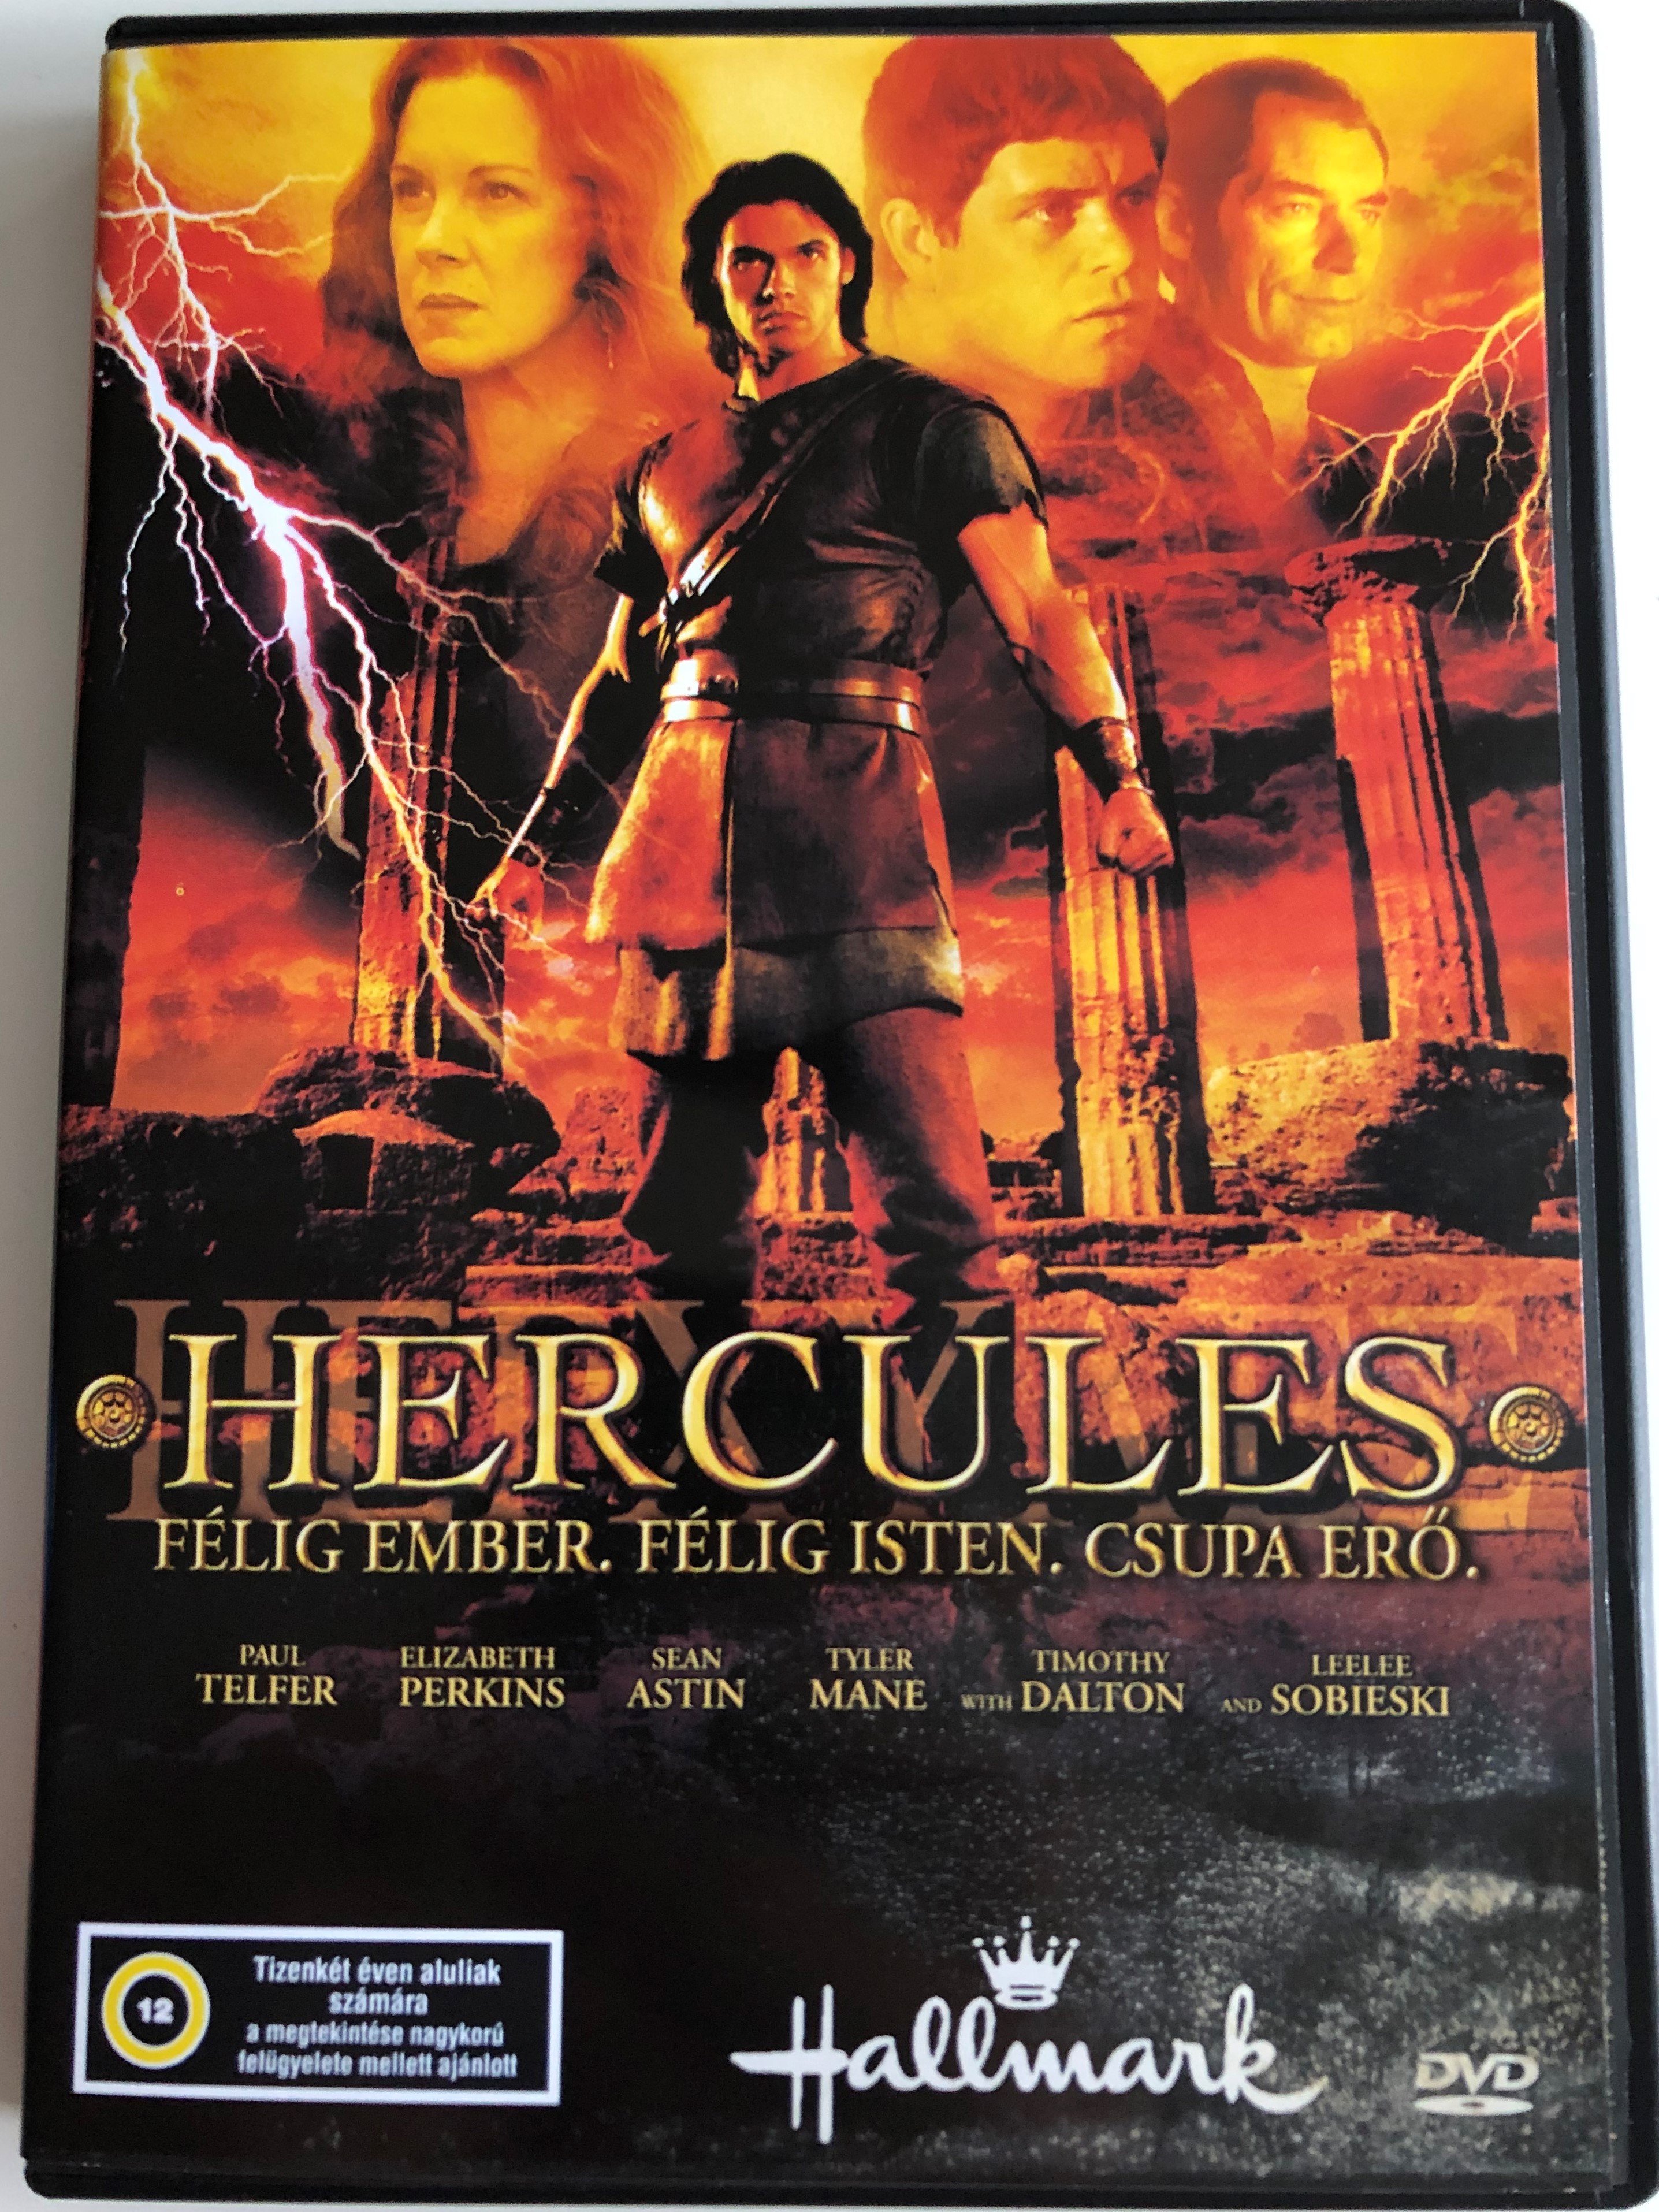 Hercules DVD 2005  Directed by Roger Young  Starring: Paul Telfer,  Elizabeth Perkins, Sean Astin, Tyler Mane, Timothy Dalton - Bible in My  Language